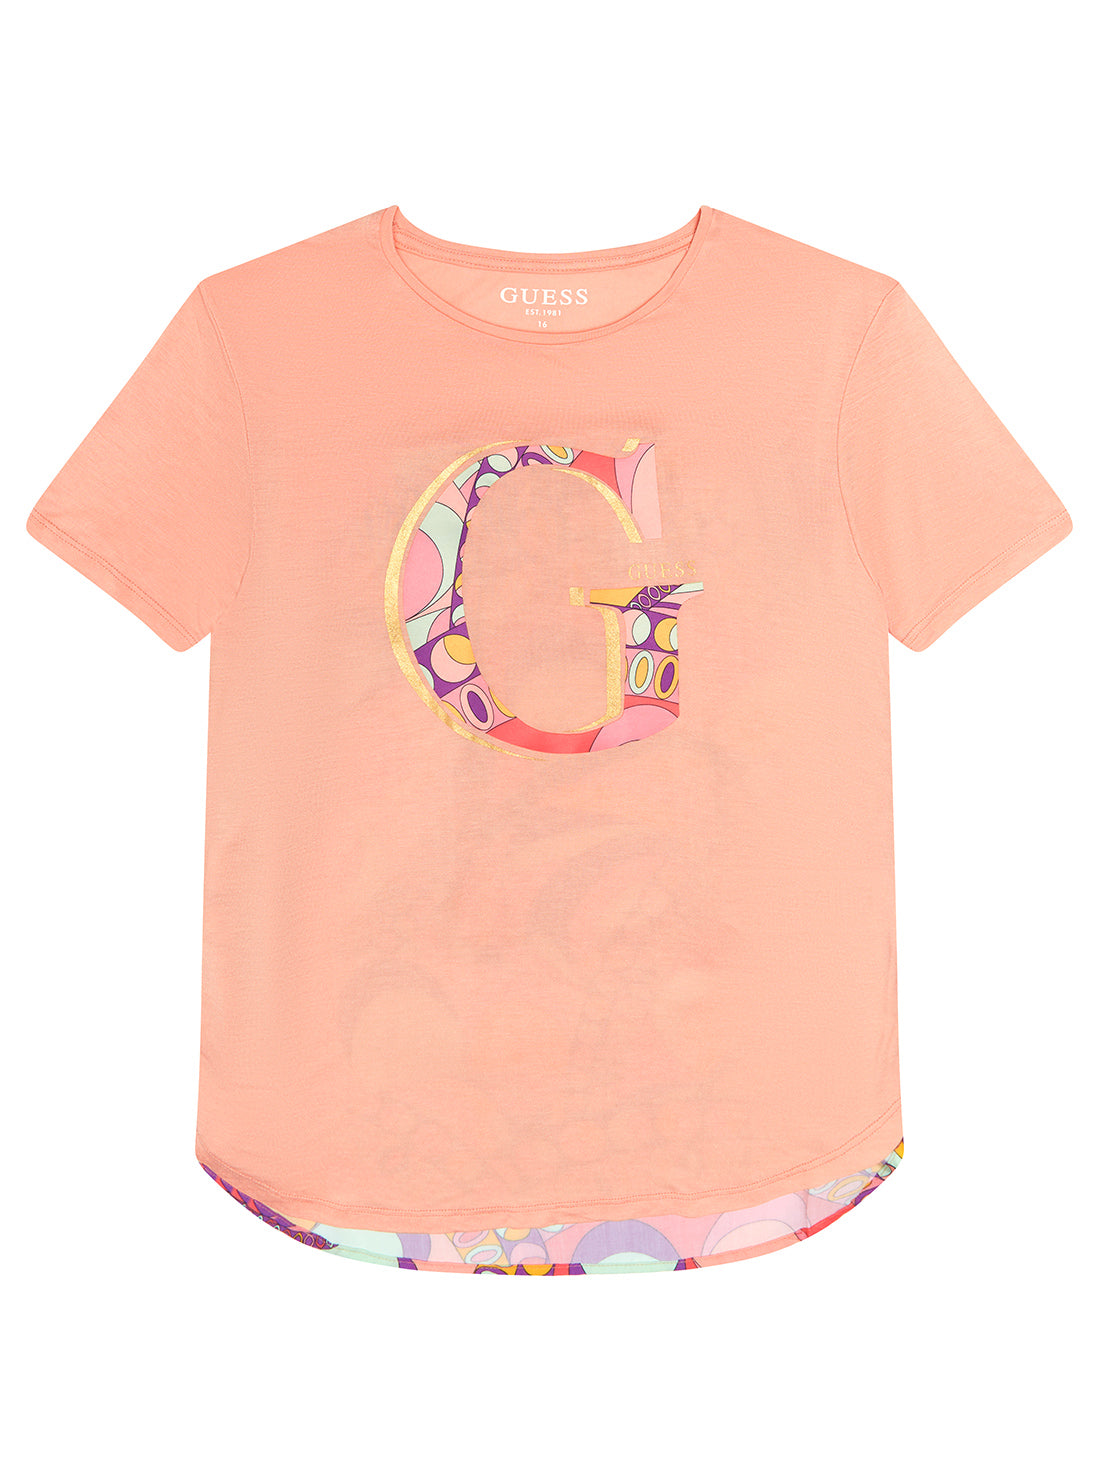 Women's Peach Circle Print T-Shirt (7-16) front view